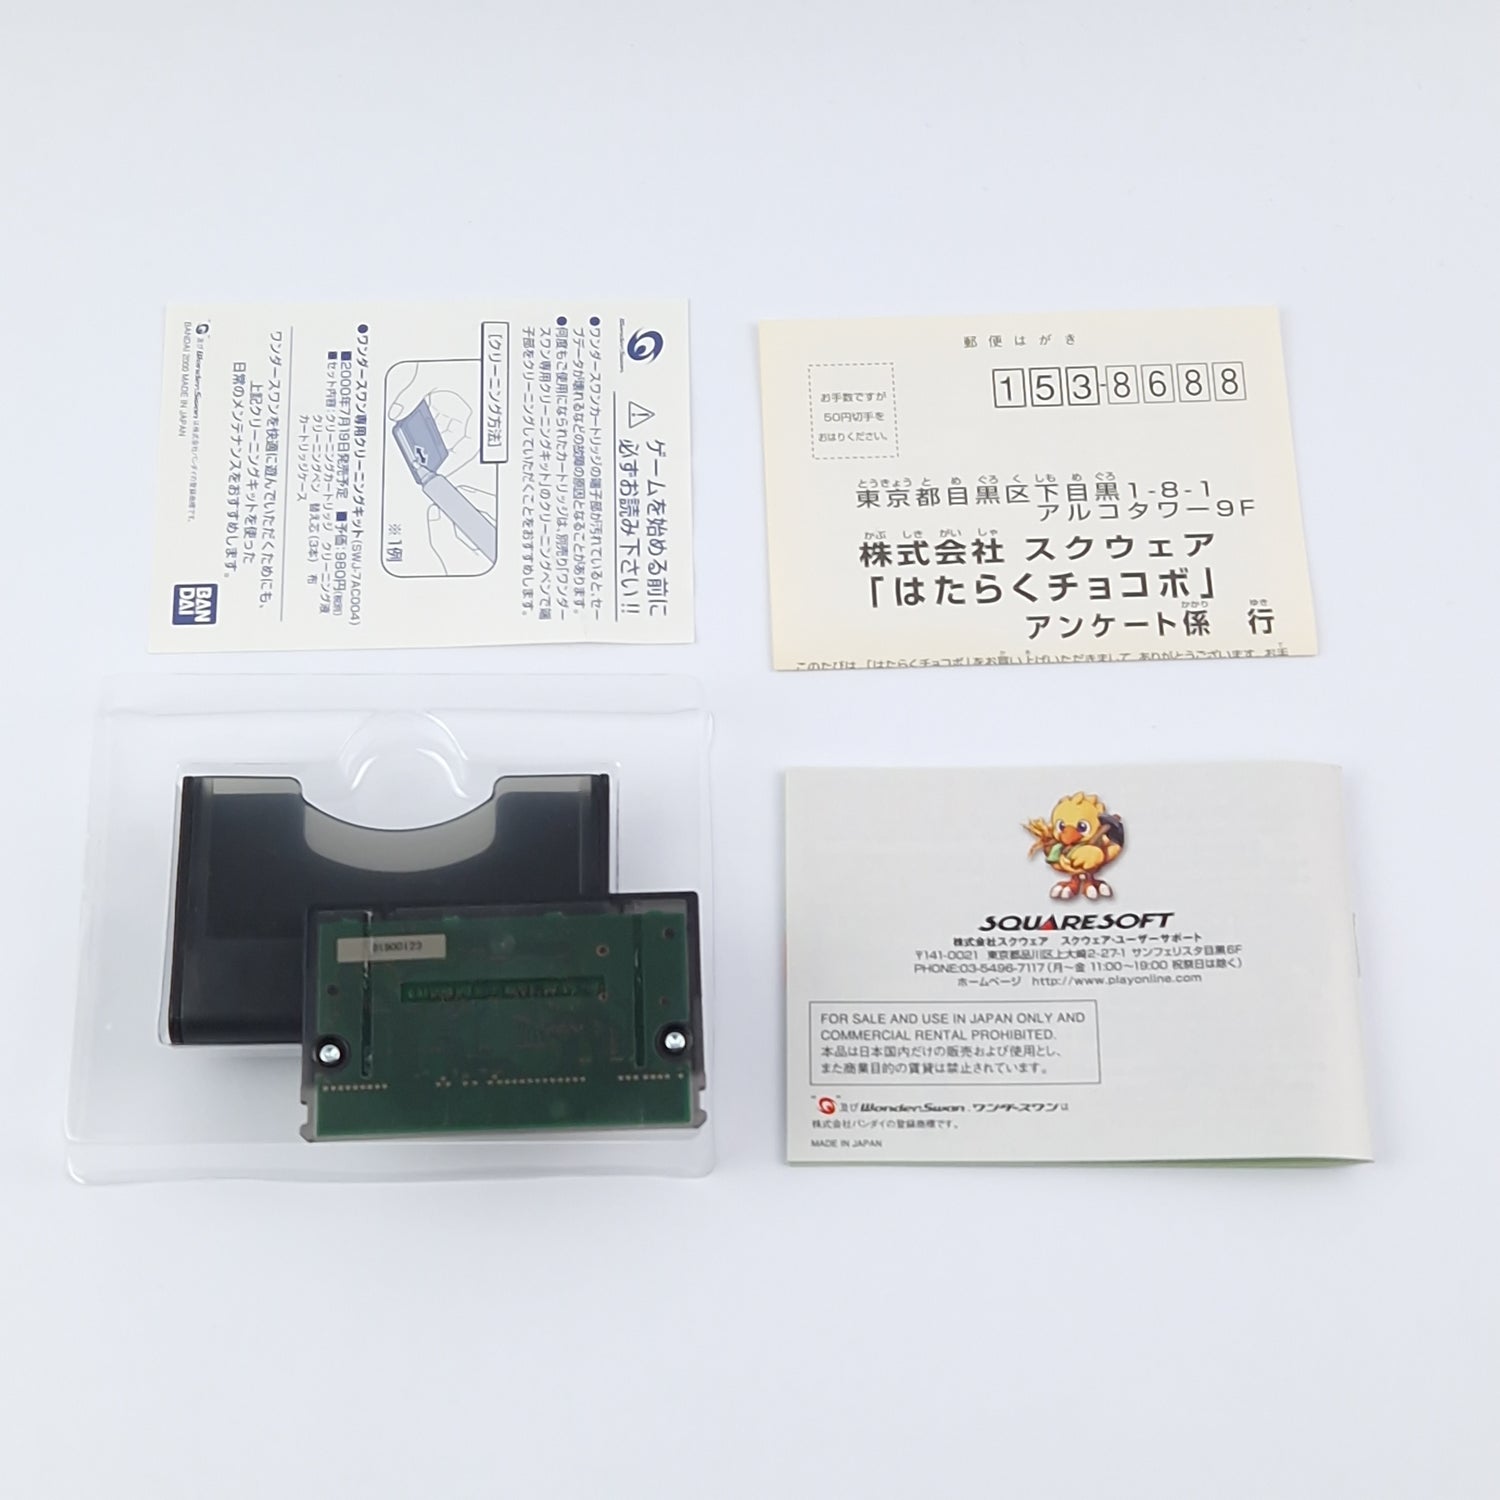 Wonderswan Game: Hataraku Chocobo - OVP Instructions Module | NTSC-J Japan Game